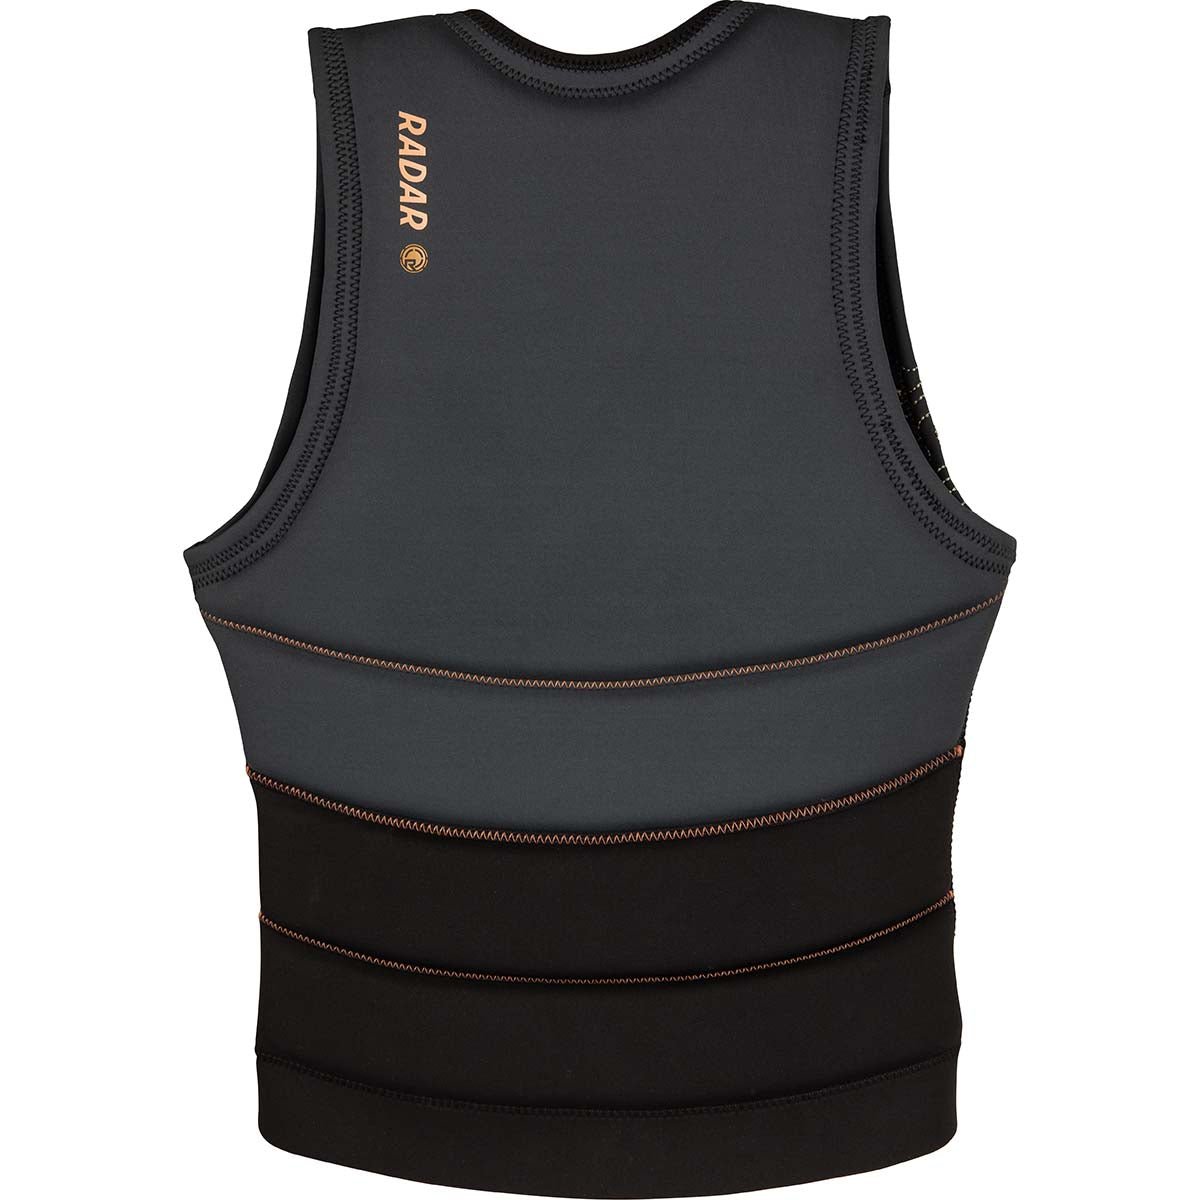 Radar Lyric Women's Comp Wake Vest in Black / Grey / Coral - BoardCo